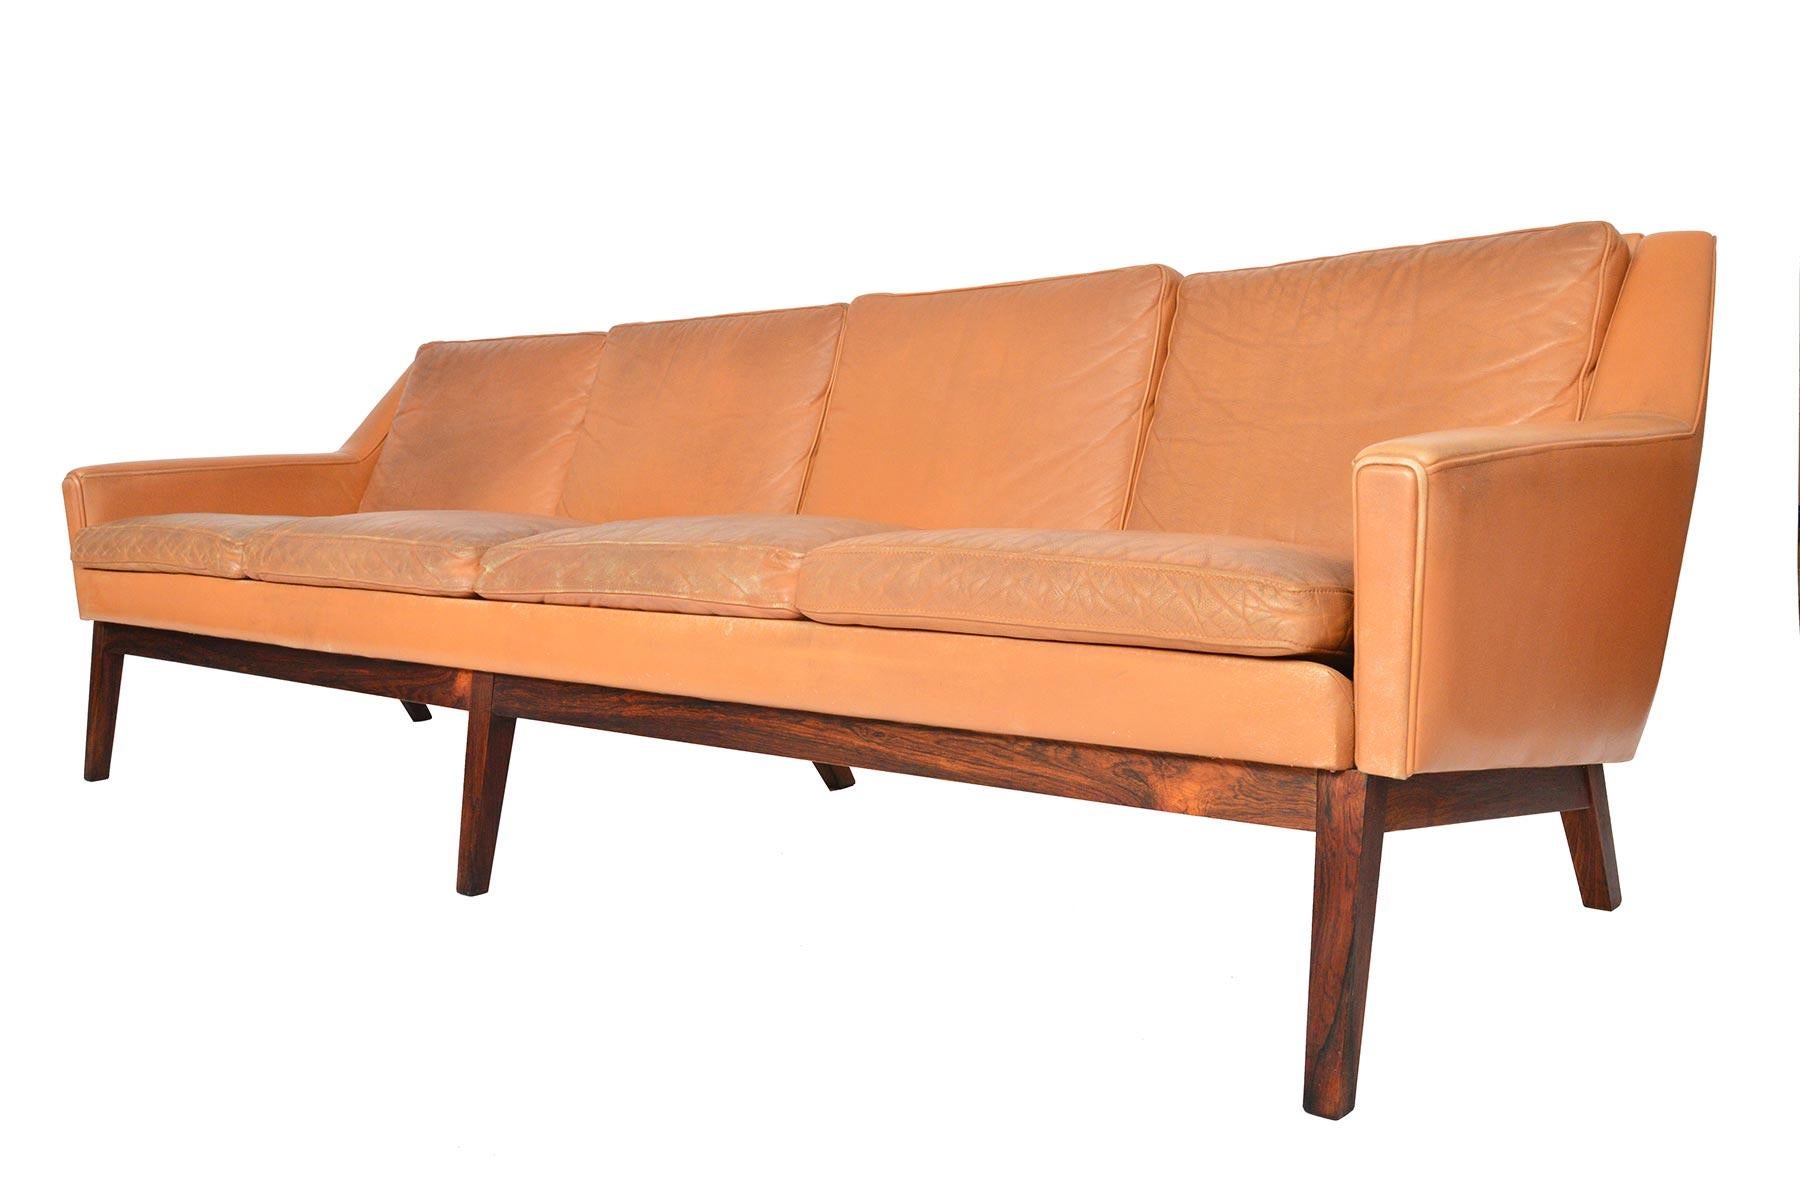 20th Century Danish Modern Four-Seat Sepia Leather Sofa